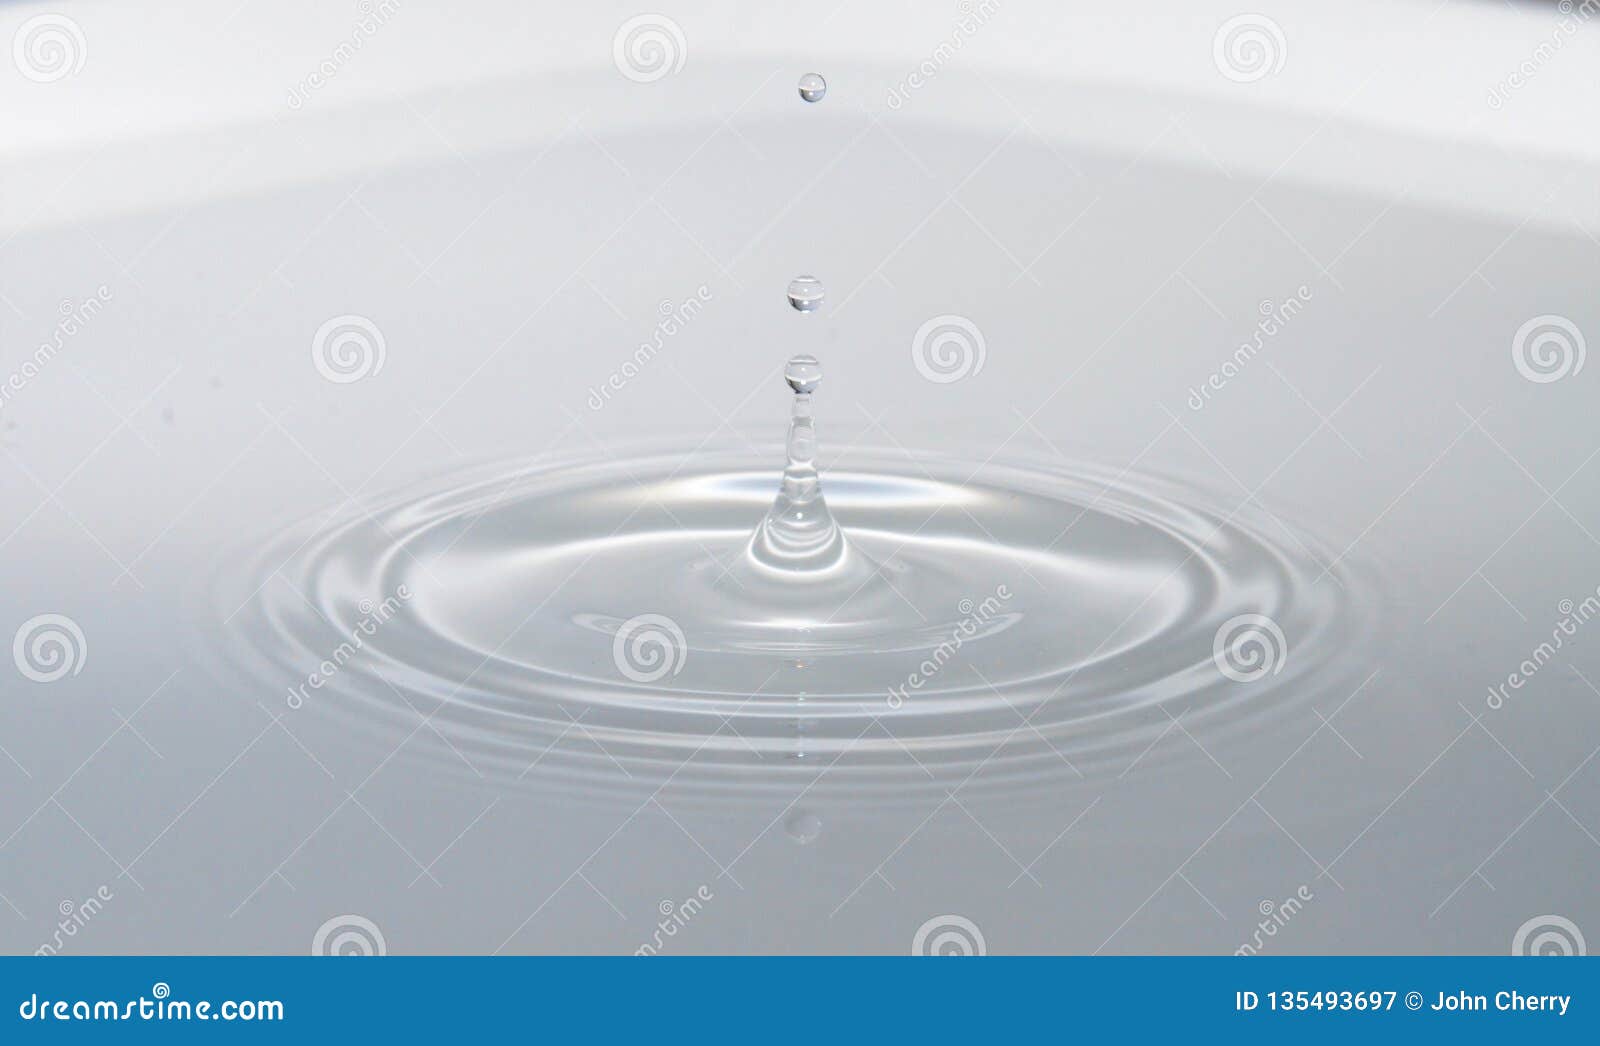 water droplet splash 3